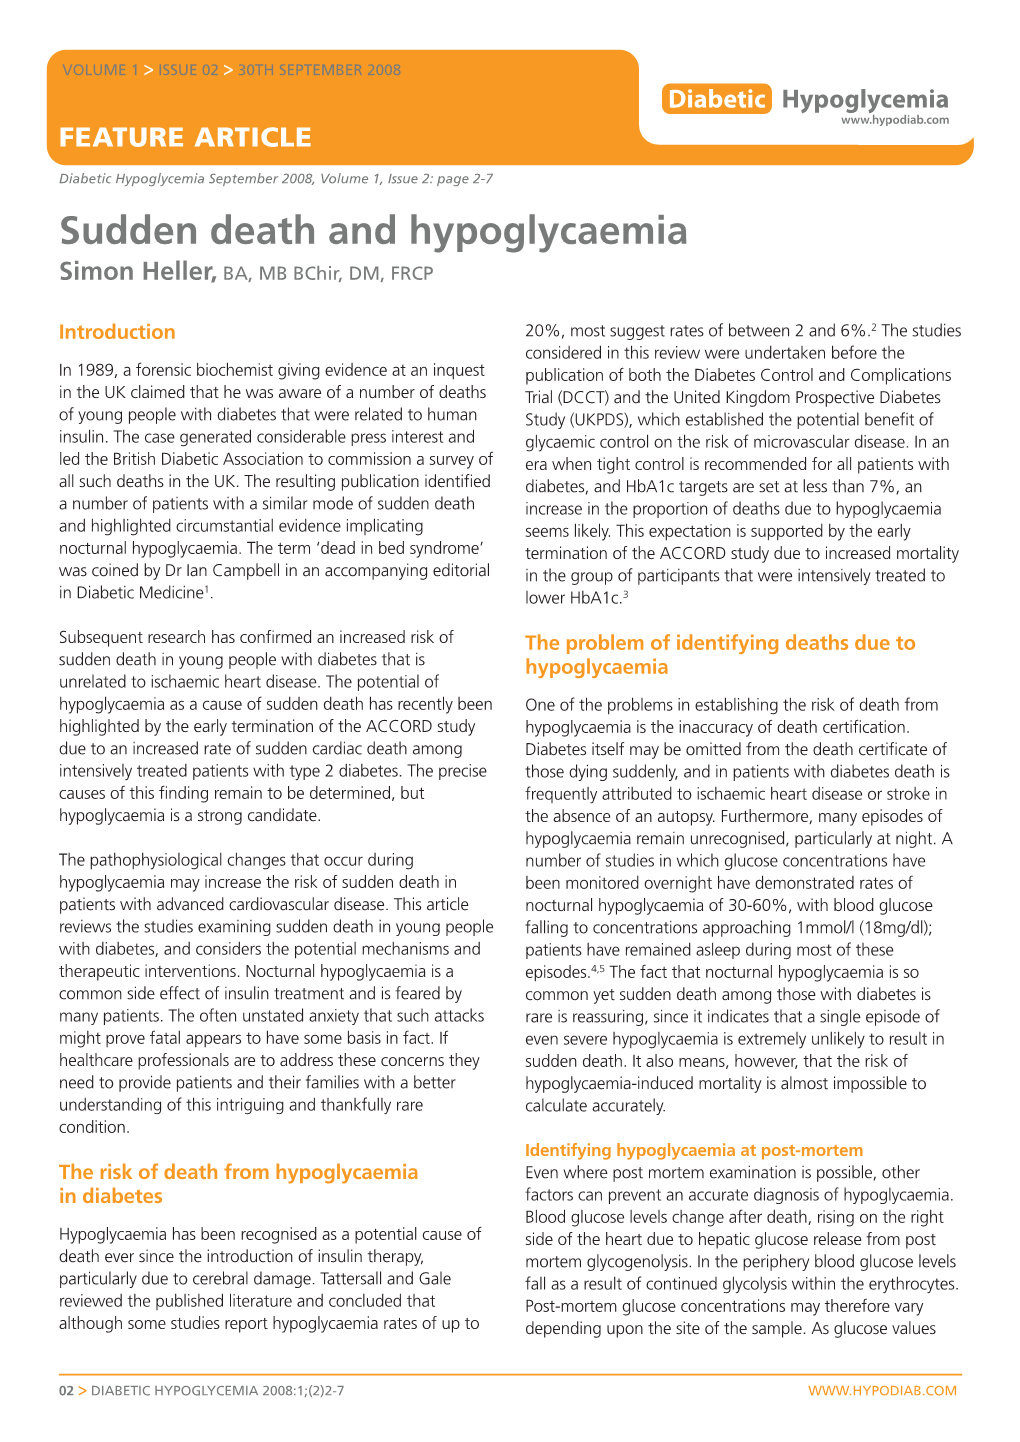 Sudden Death and Hypoglycaemia Simon Heller, BA, MB Bchir, DM, FRCP